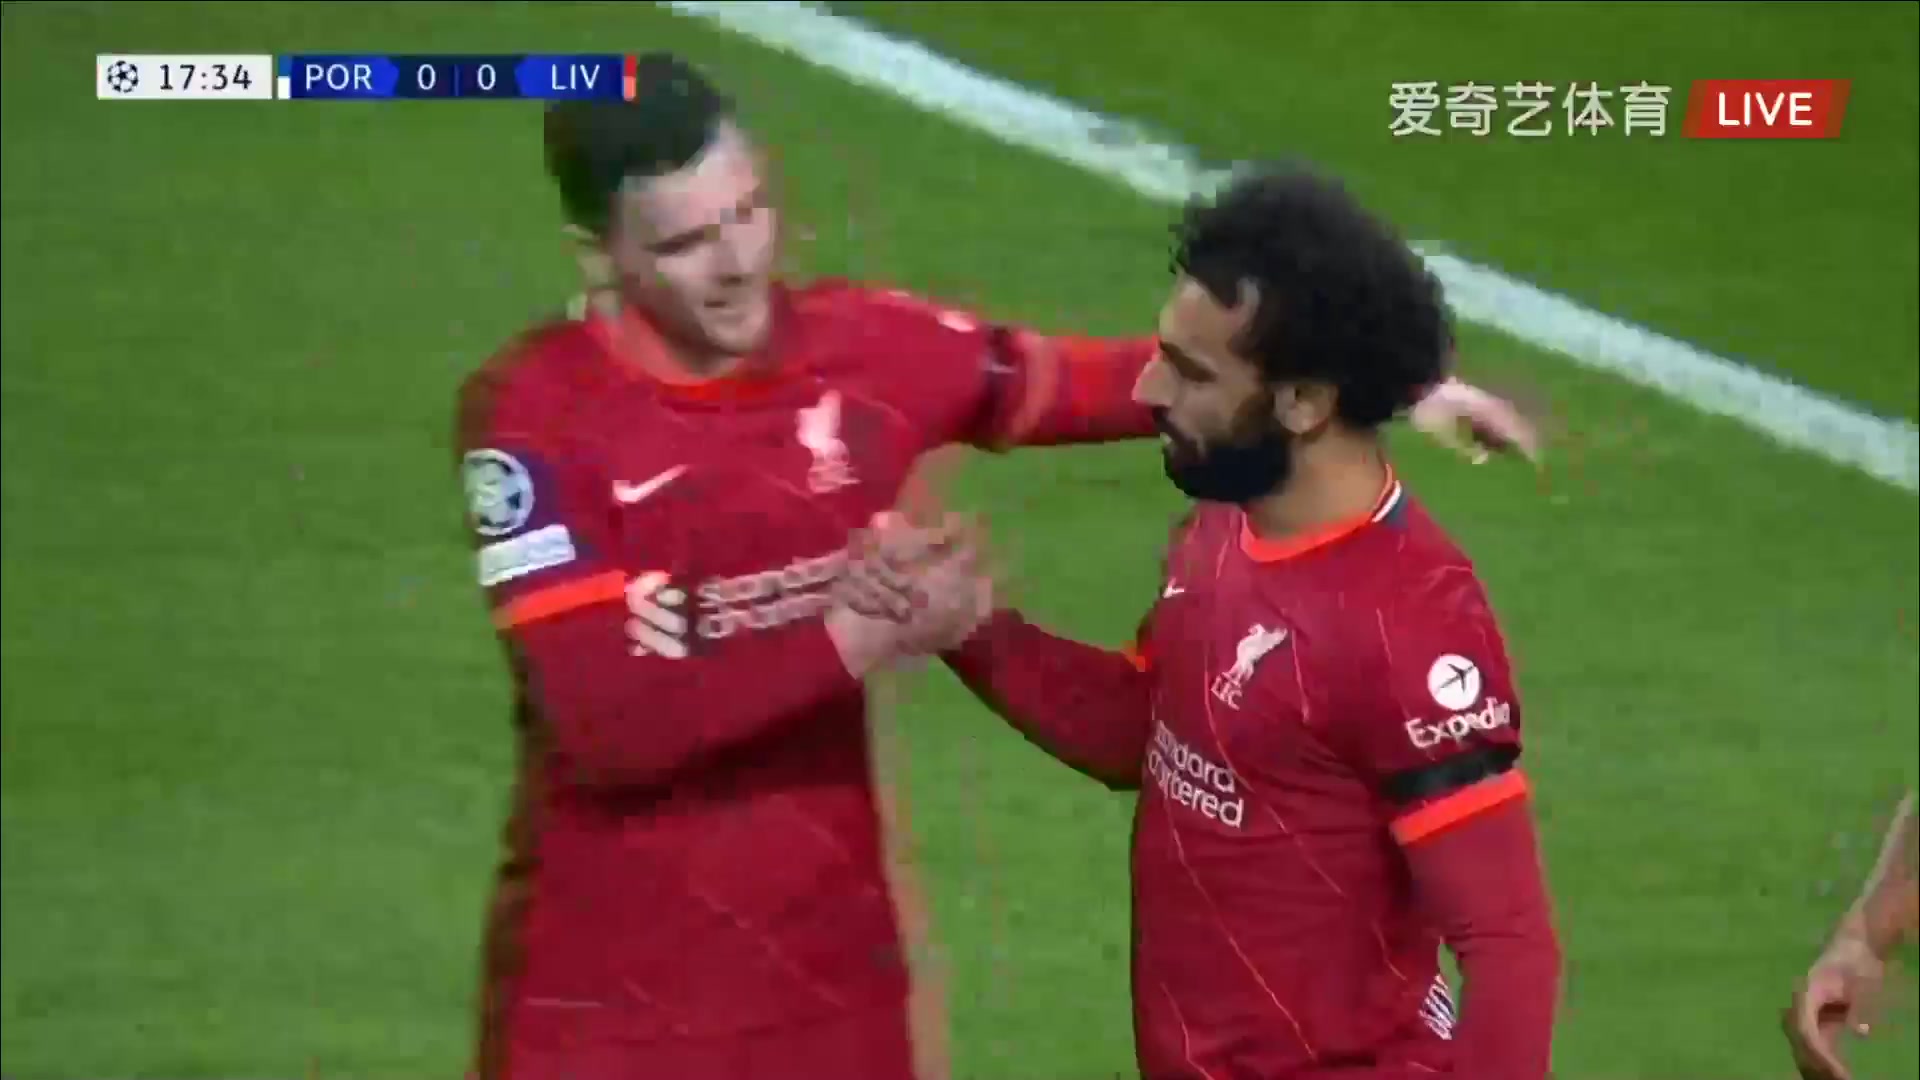 UEFA CL FC Porto Vs Liverpool  Goal in 17 min, Score 0:1